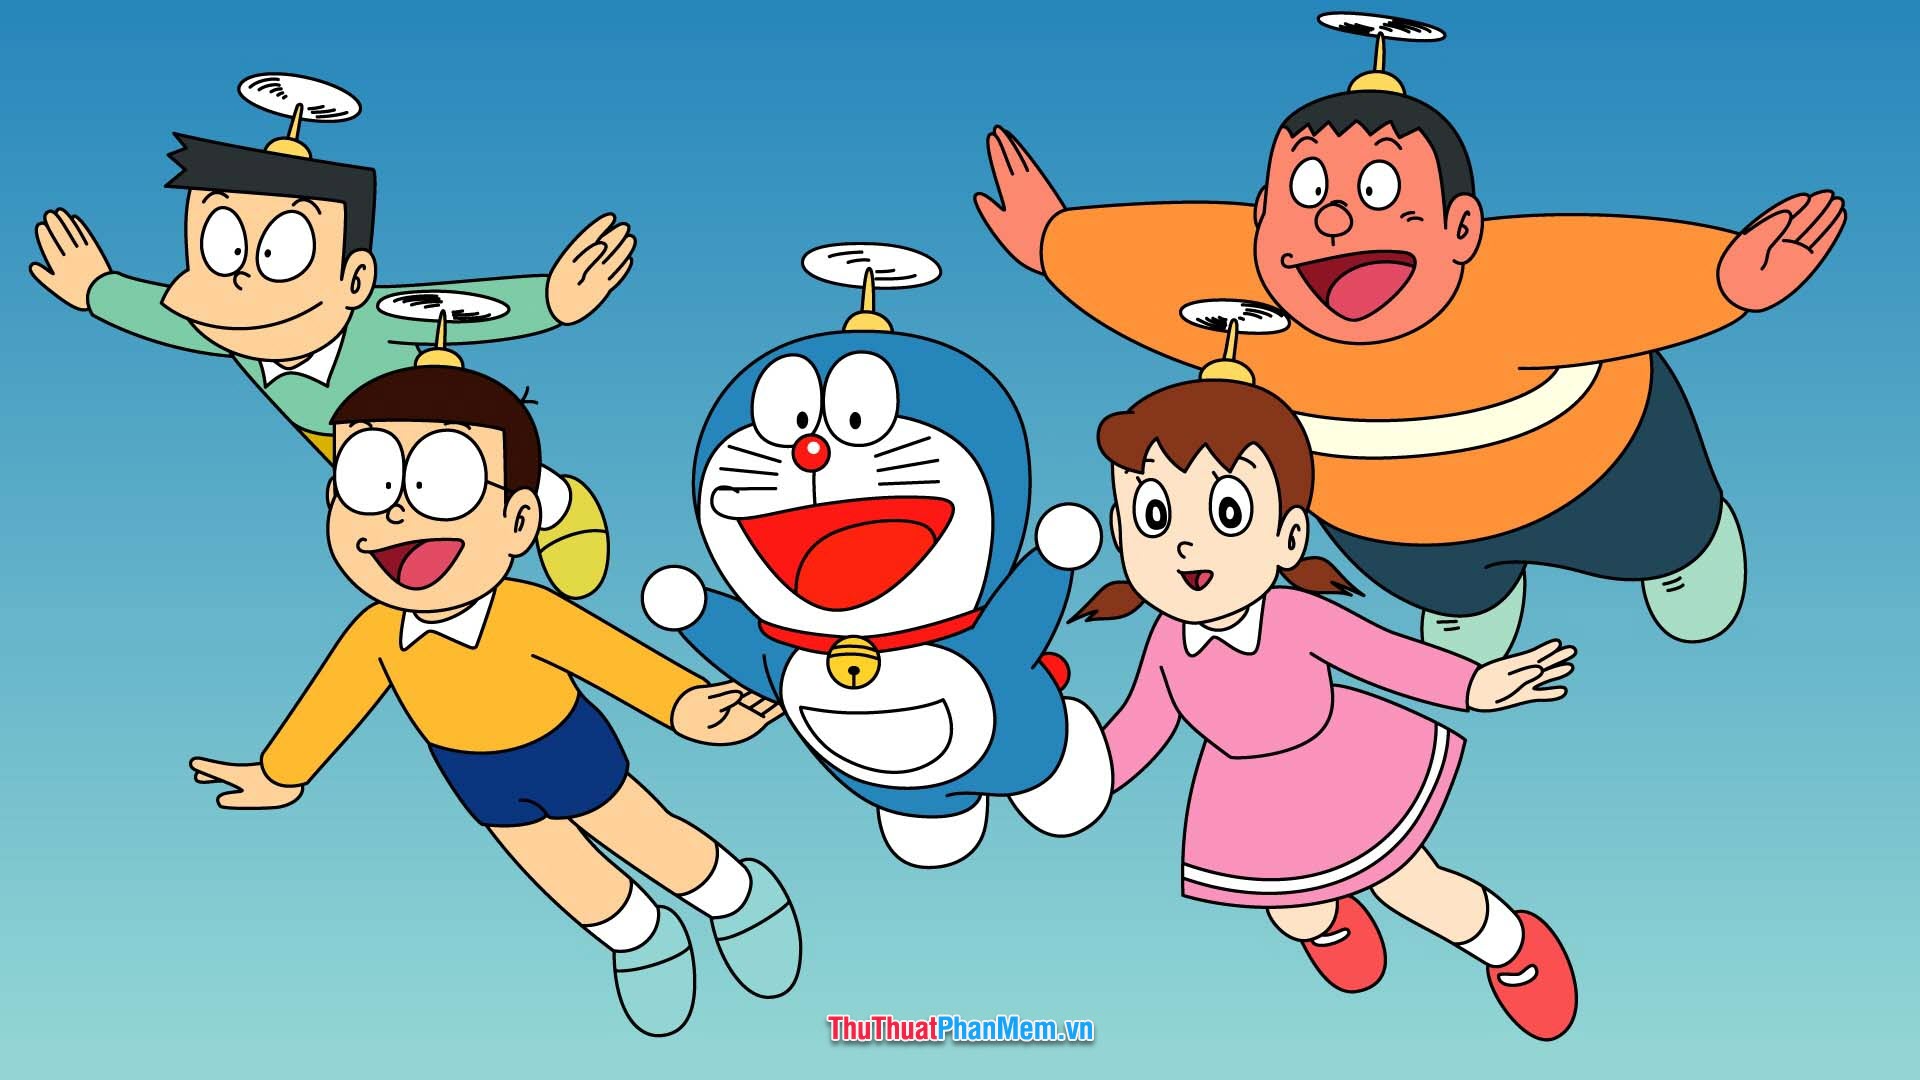 Doraemon – Đôrêmon